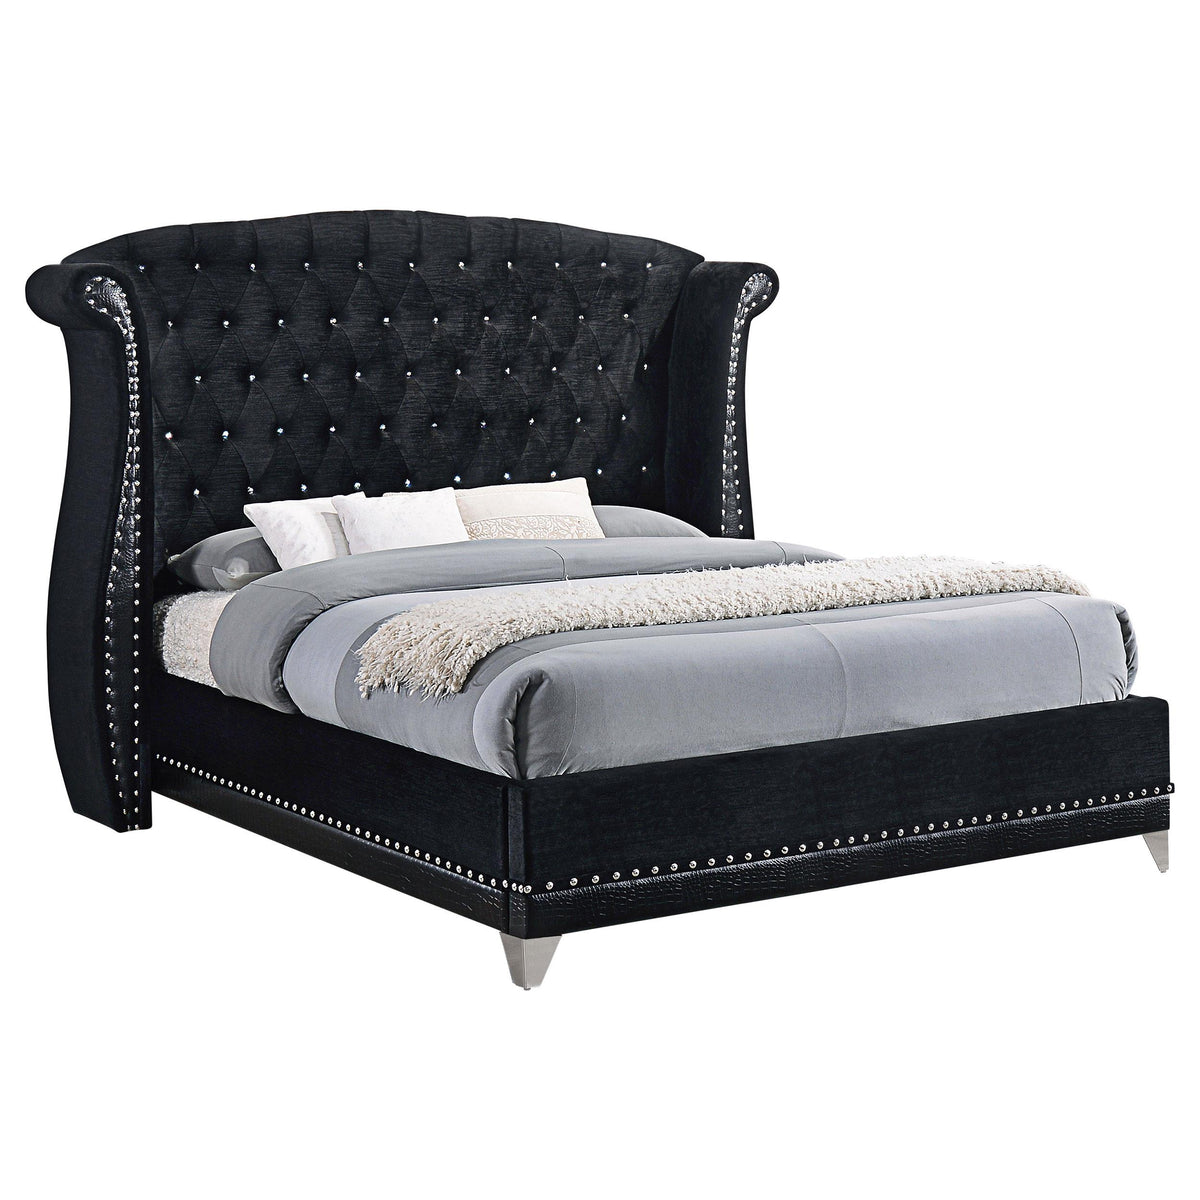 Barzini Eastern King Tufted Upholstered Bed Black Barzini Eastern King Tufted Upholstered Bed Black Half Price Furniture